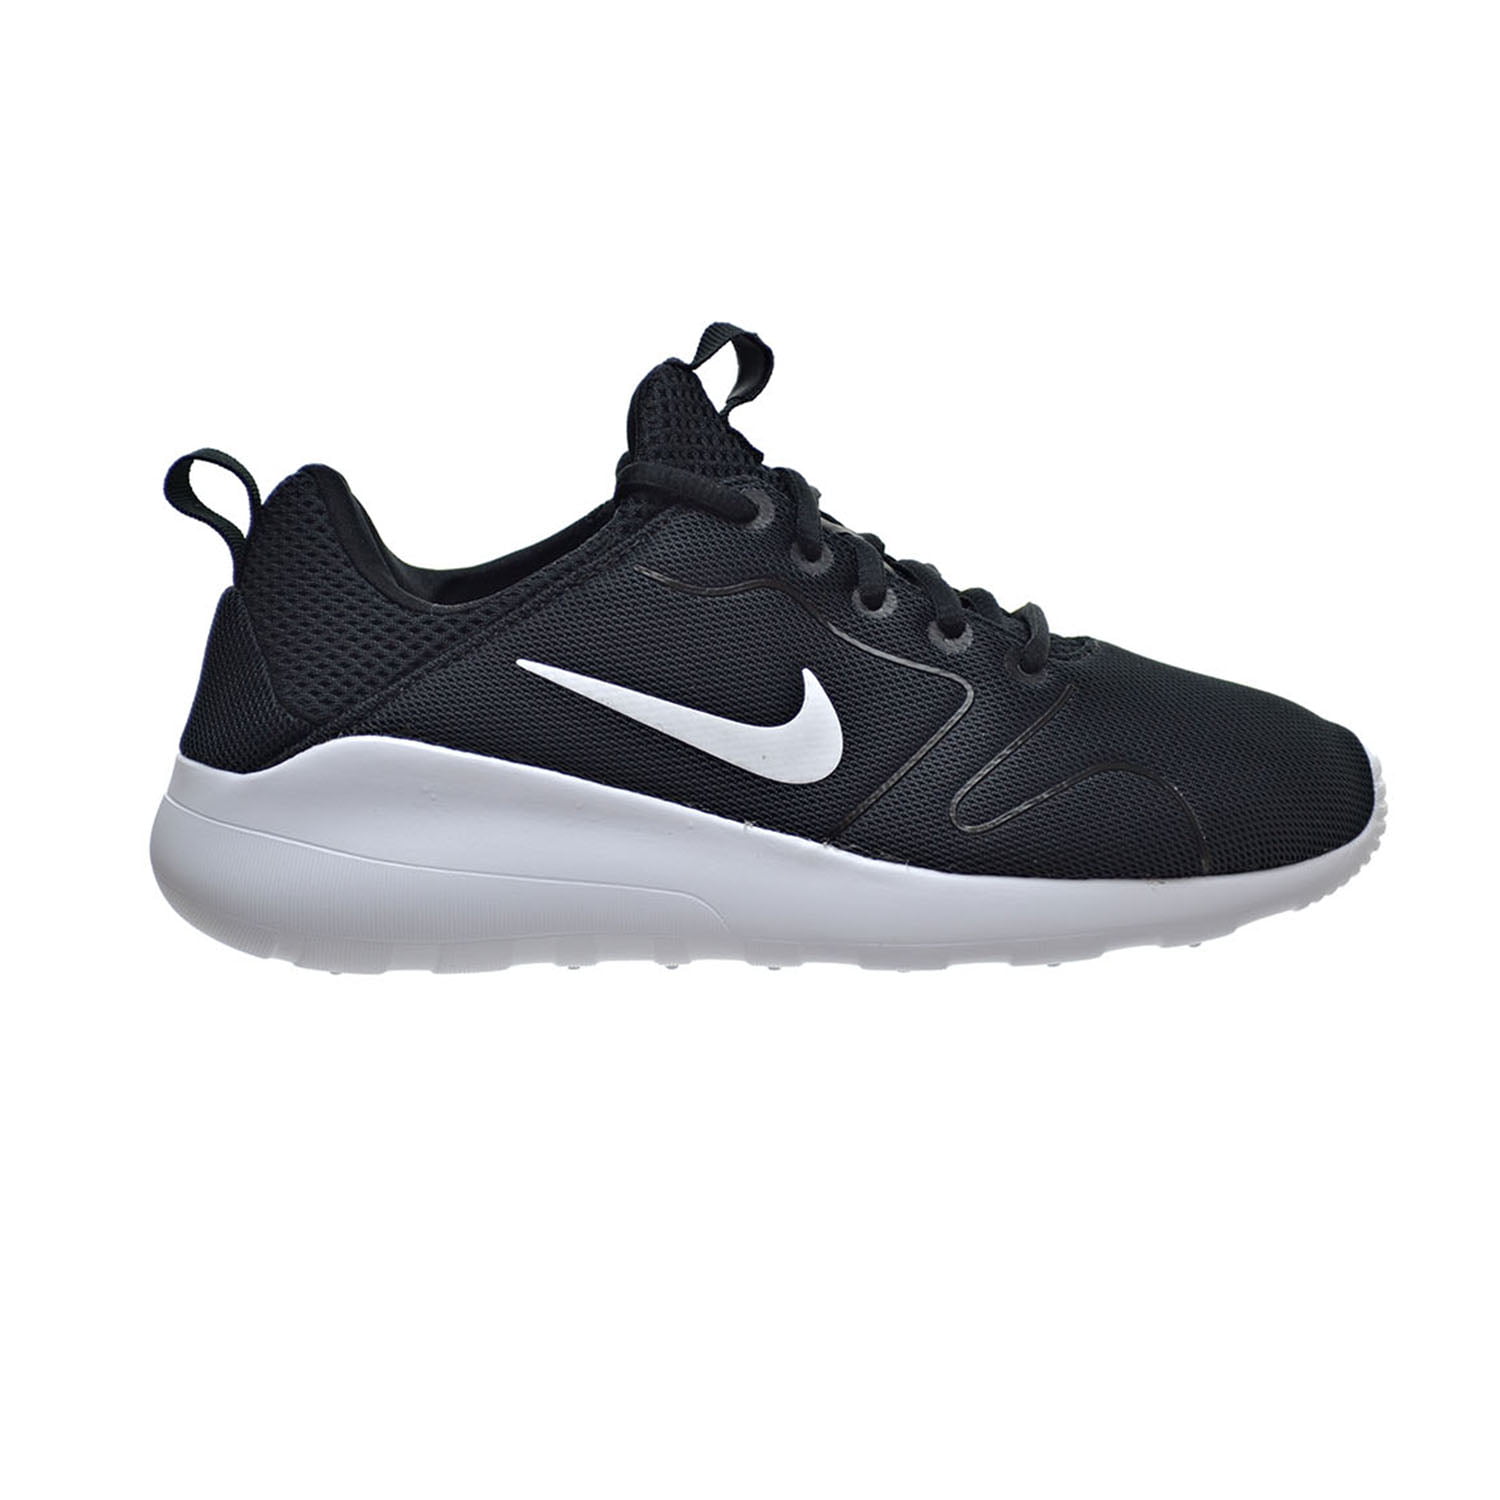 Nike 2.0 Men's Shoes Black/White 833411-010 Walmart.com